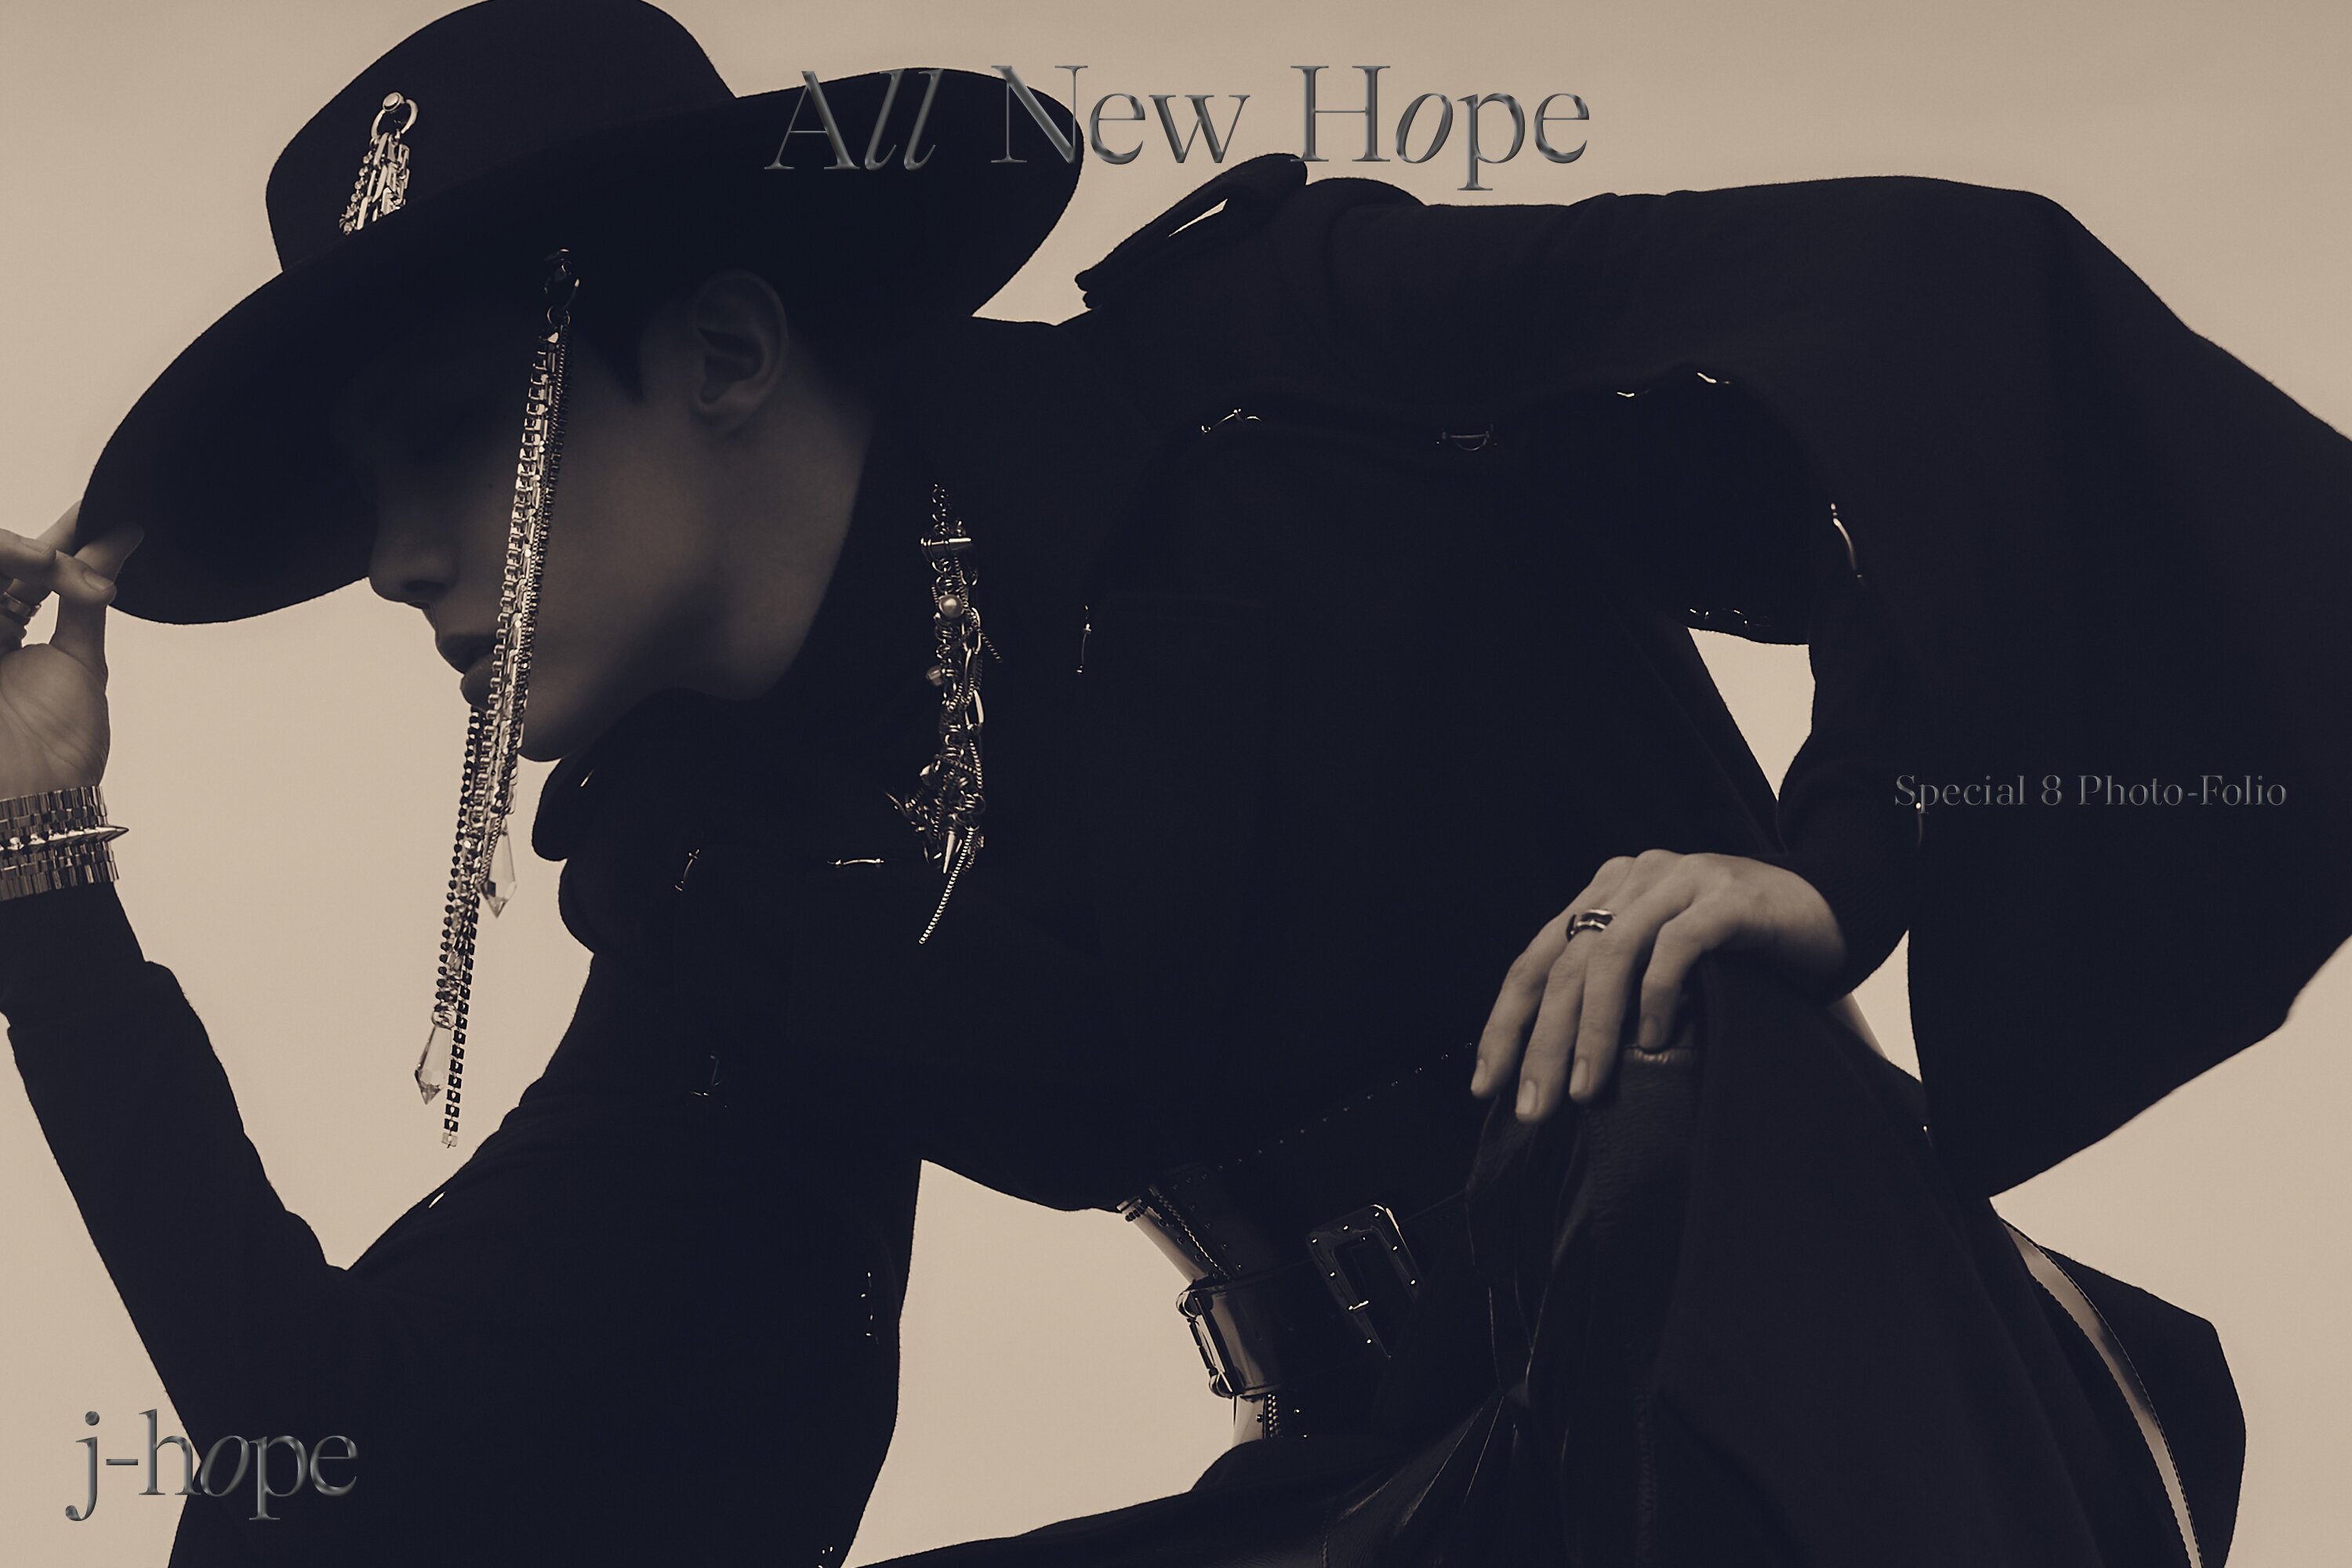 BTS' j-hope reveals 'Me, Myself, and j-hope' 'All New Hope